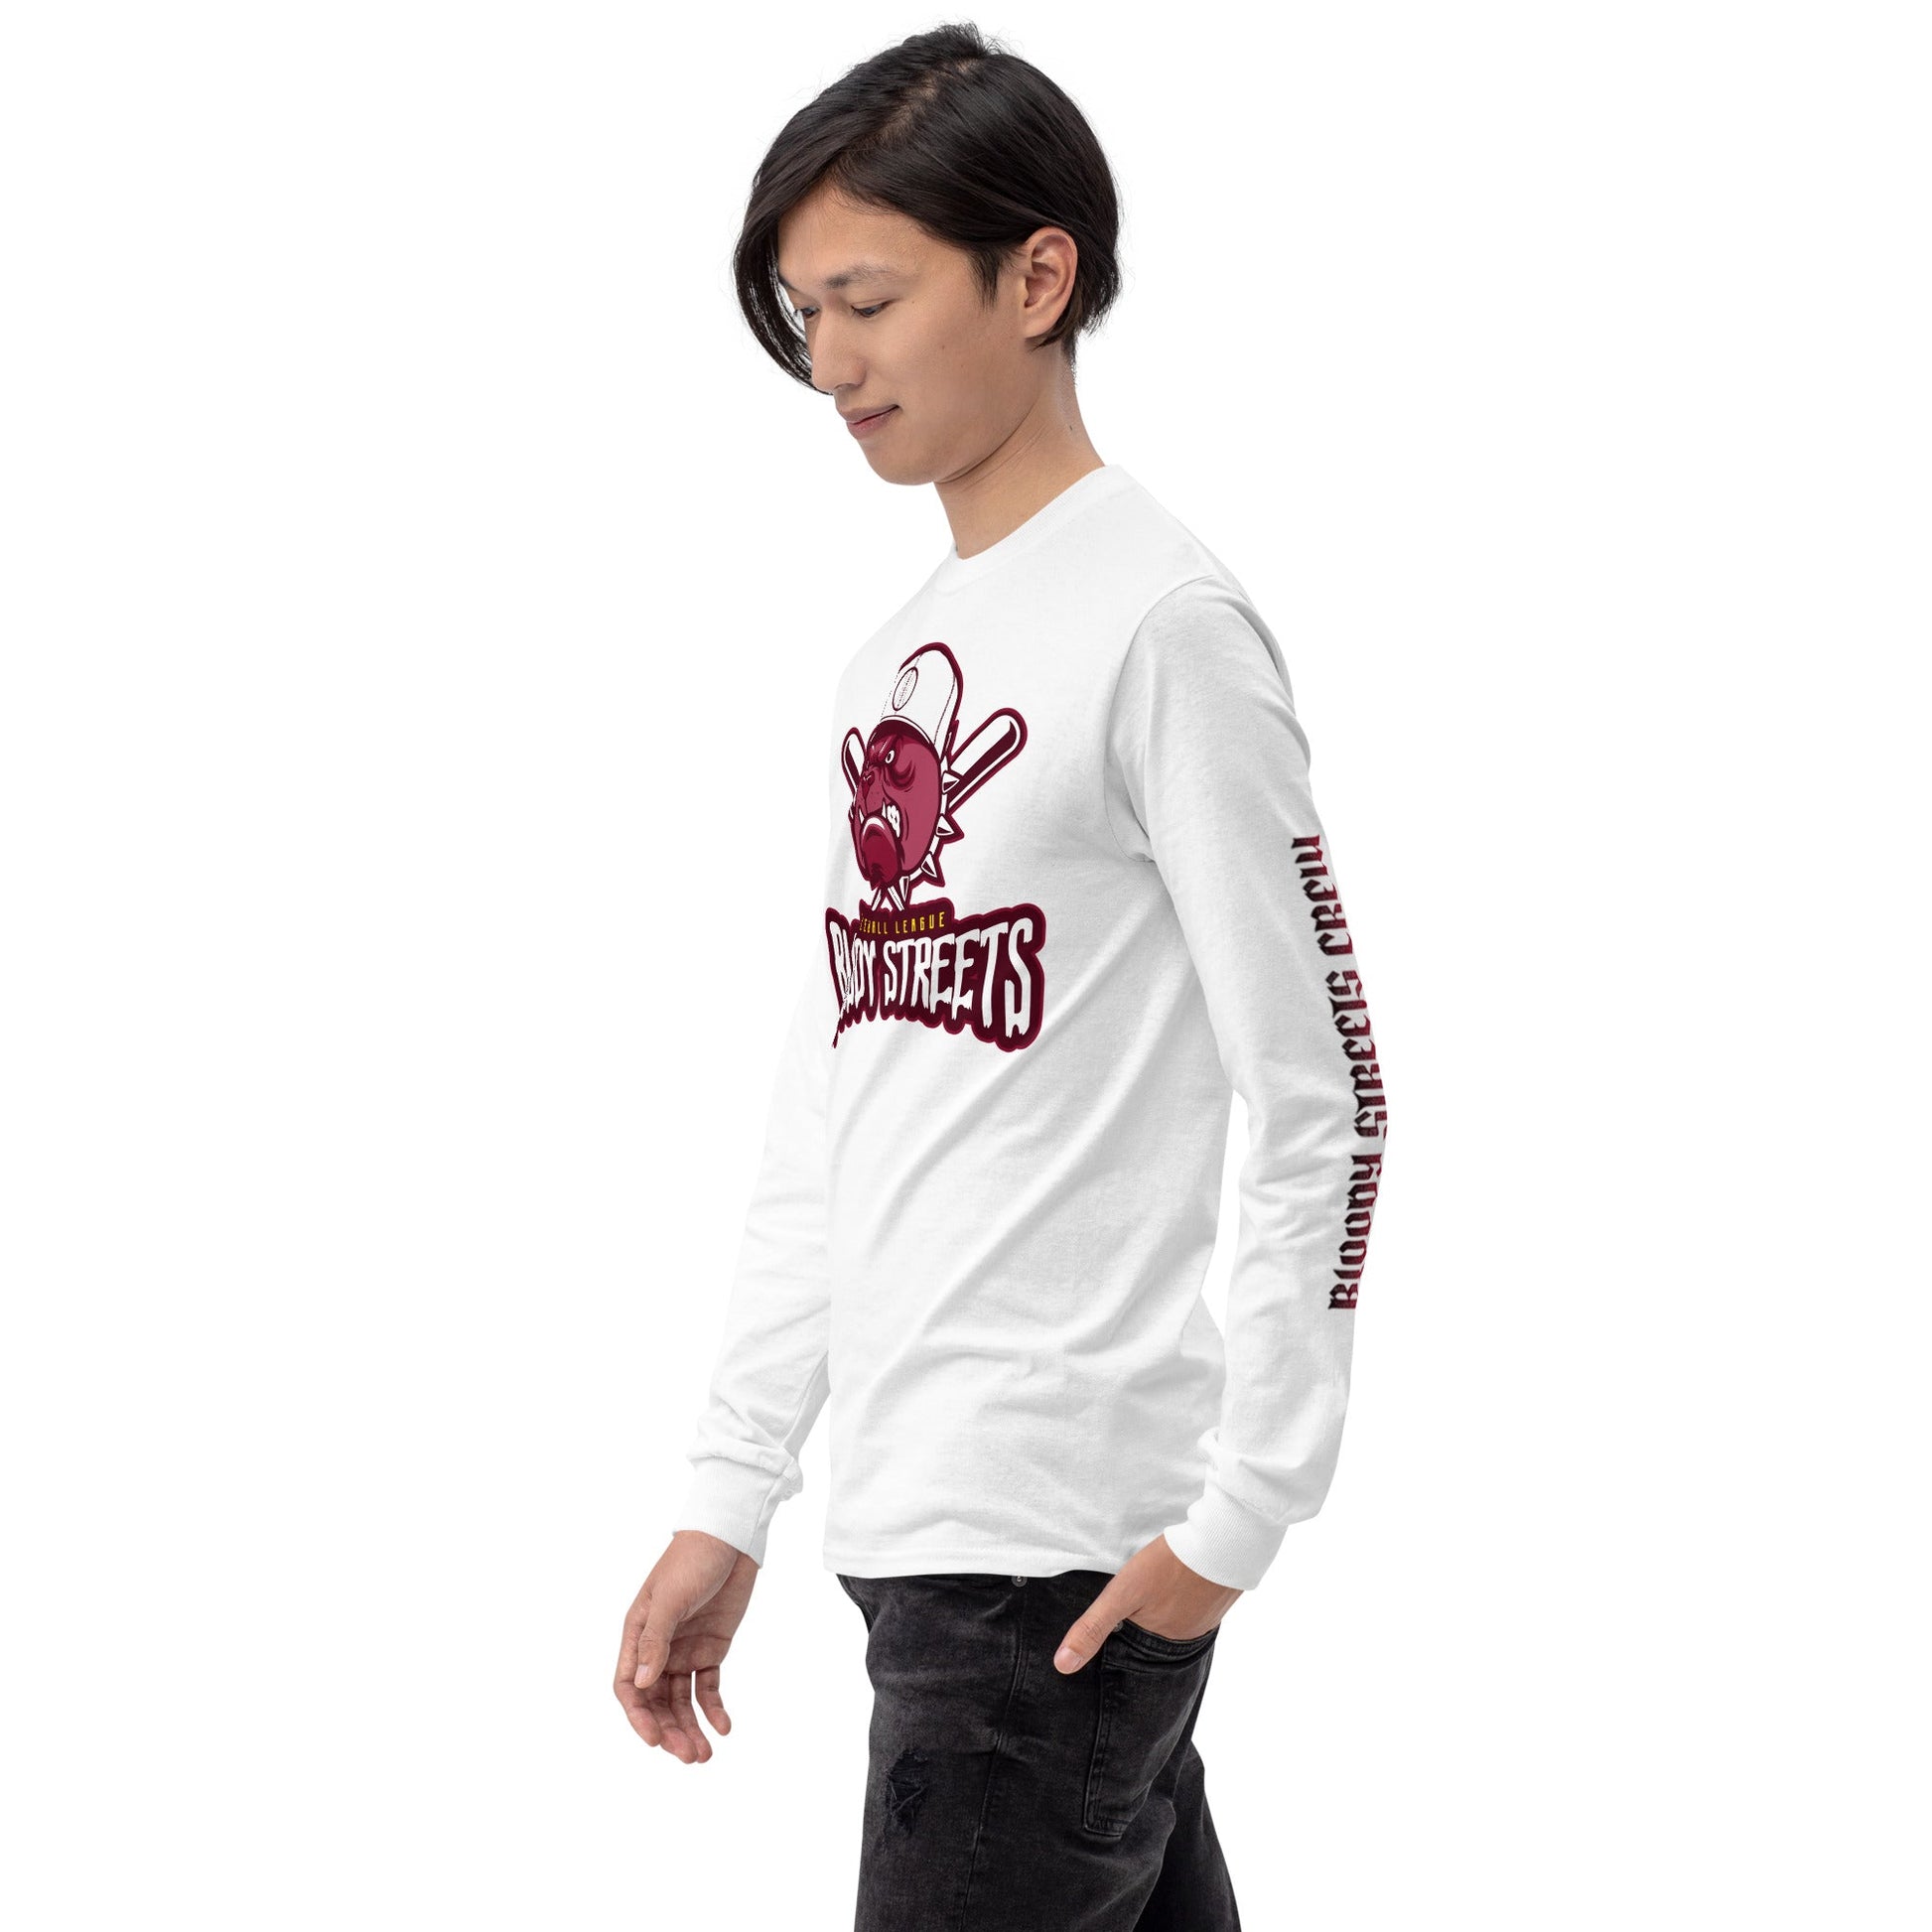 Baseball Bull Dog - Premium Longsleeve - BLOODY-STREETS.DE Streetwear Herren und Damen Hoodies, T-Shirts, Pullis